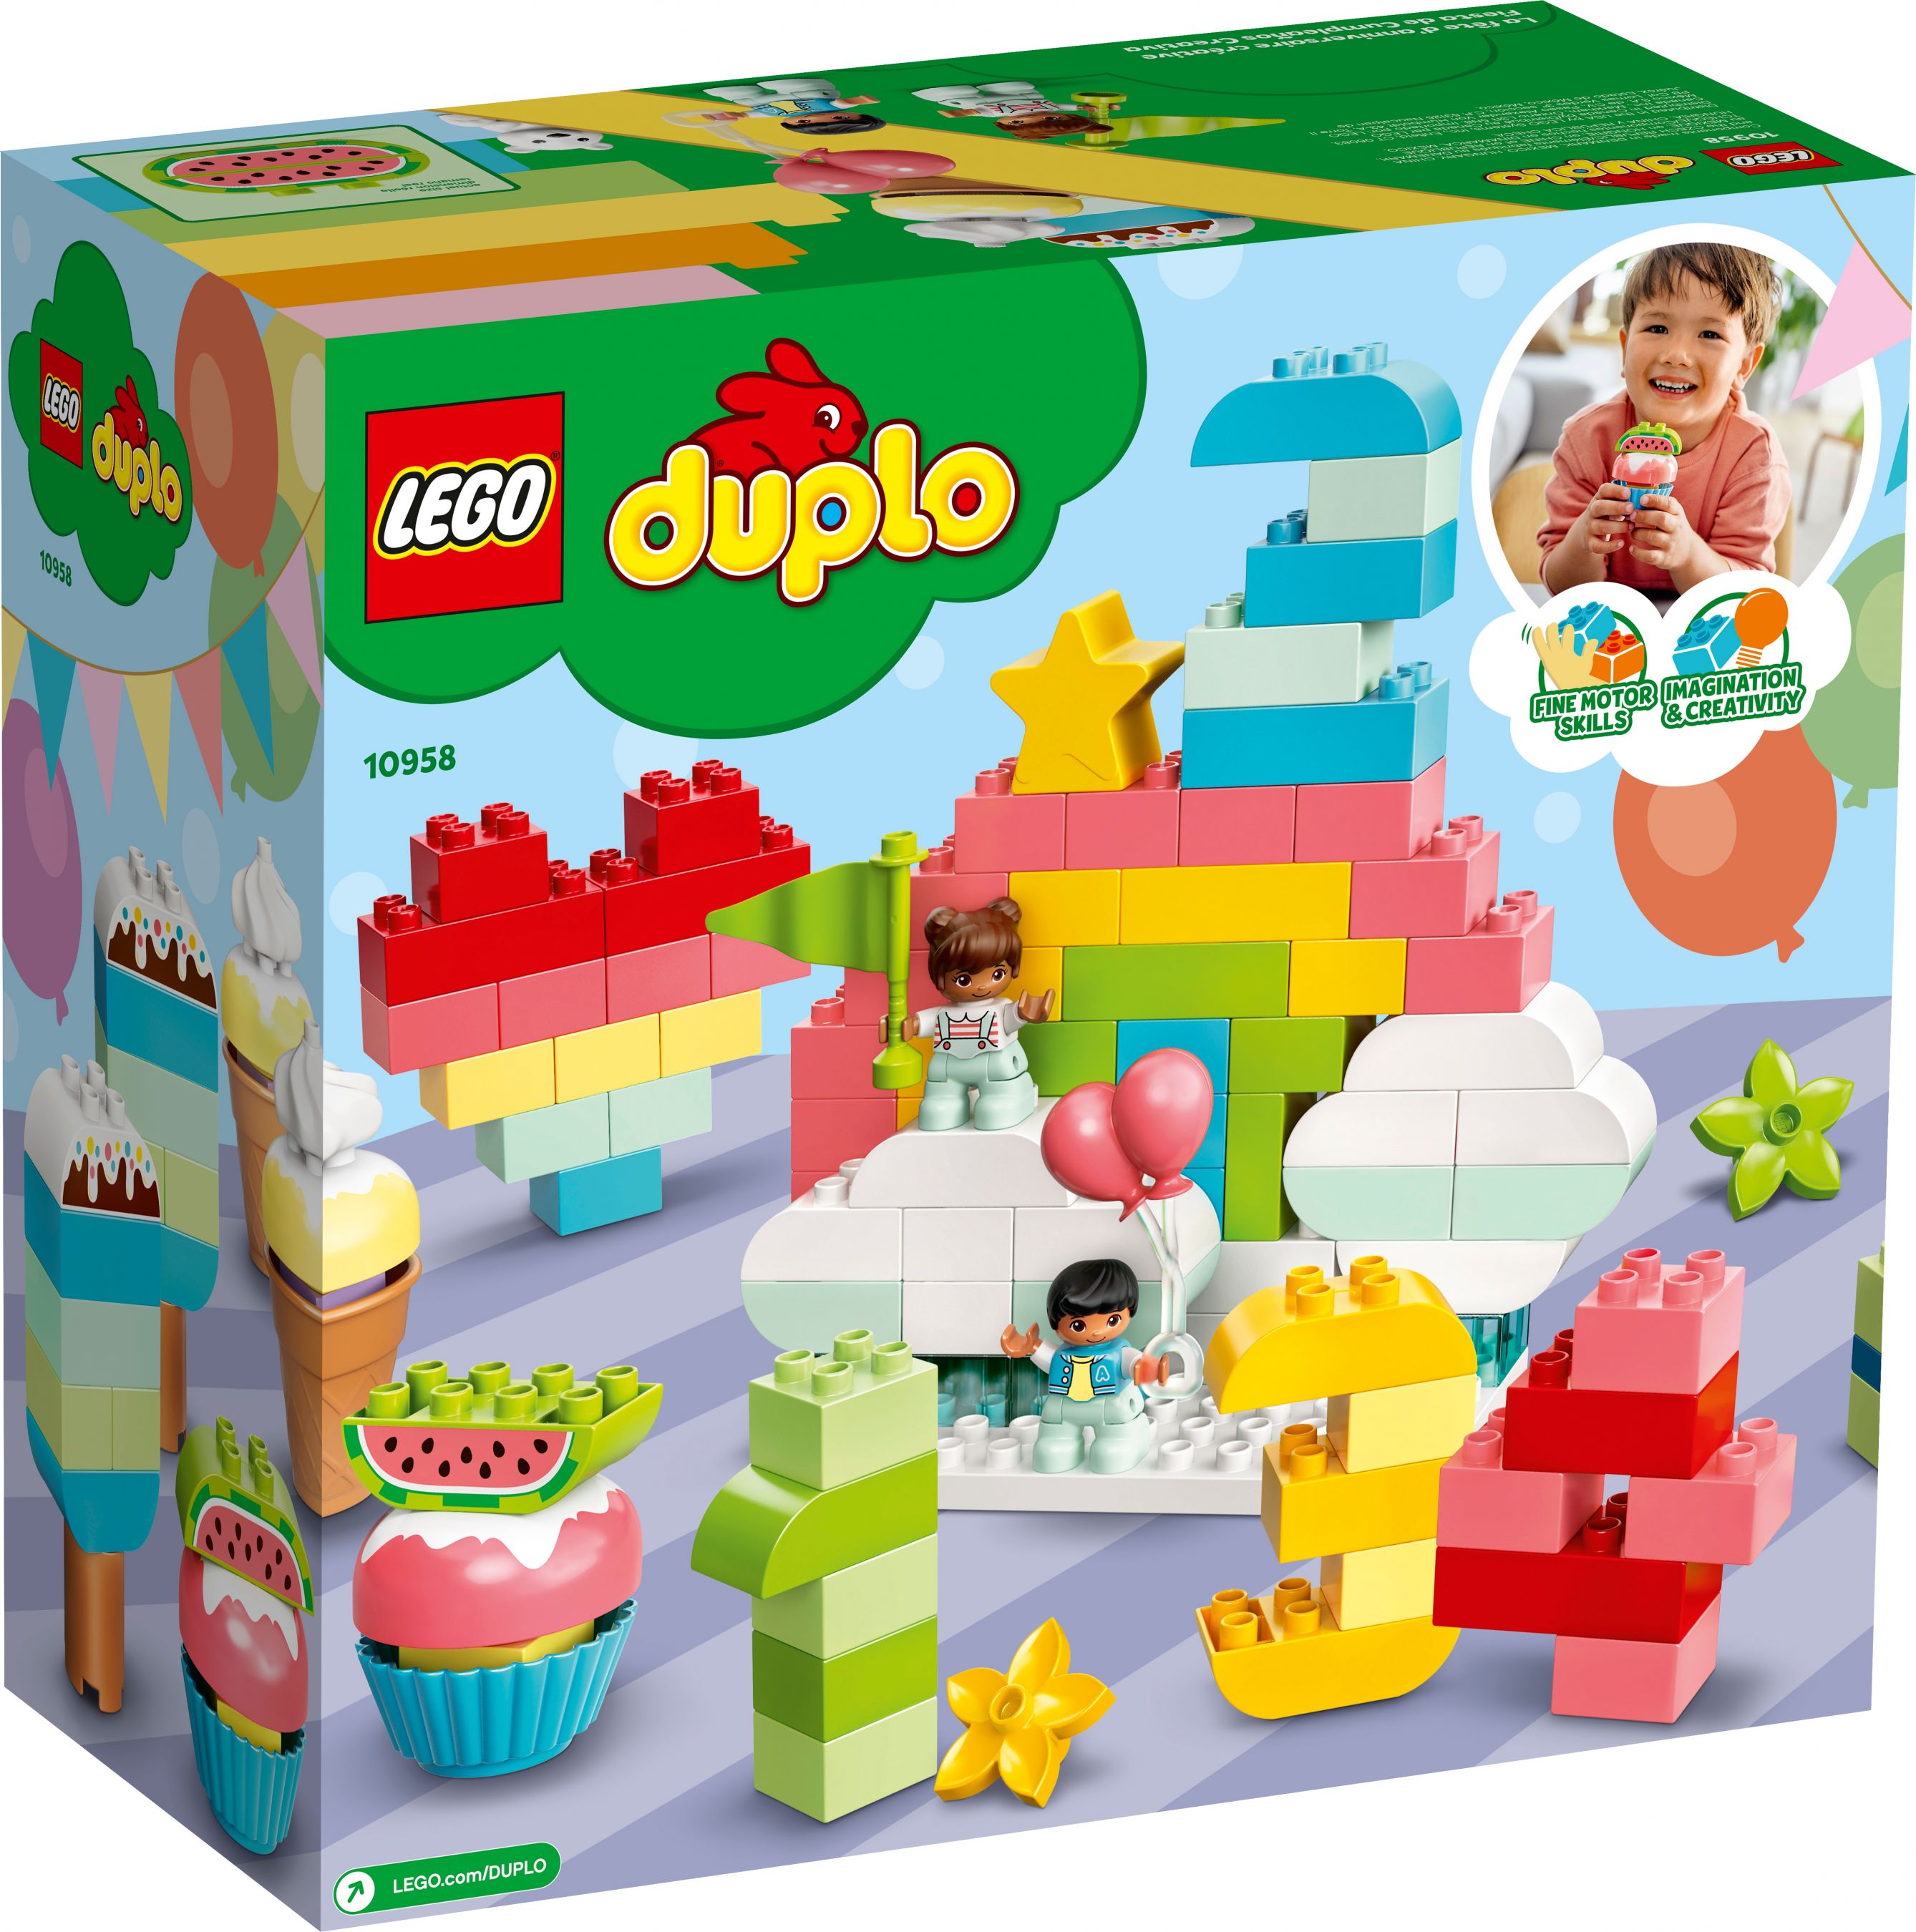 LEGO Duplo 10958 Kreative Geburtstagsparty LEGO_10958_box5_v39.jpg